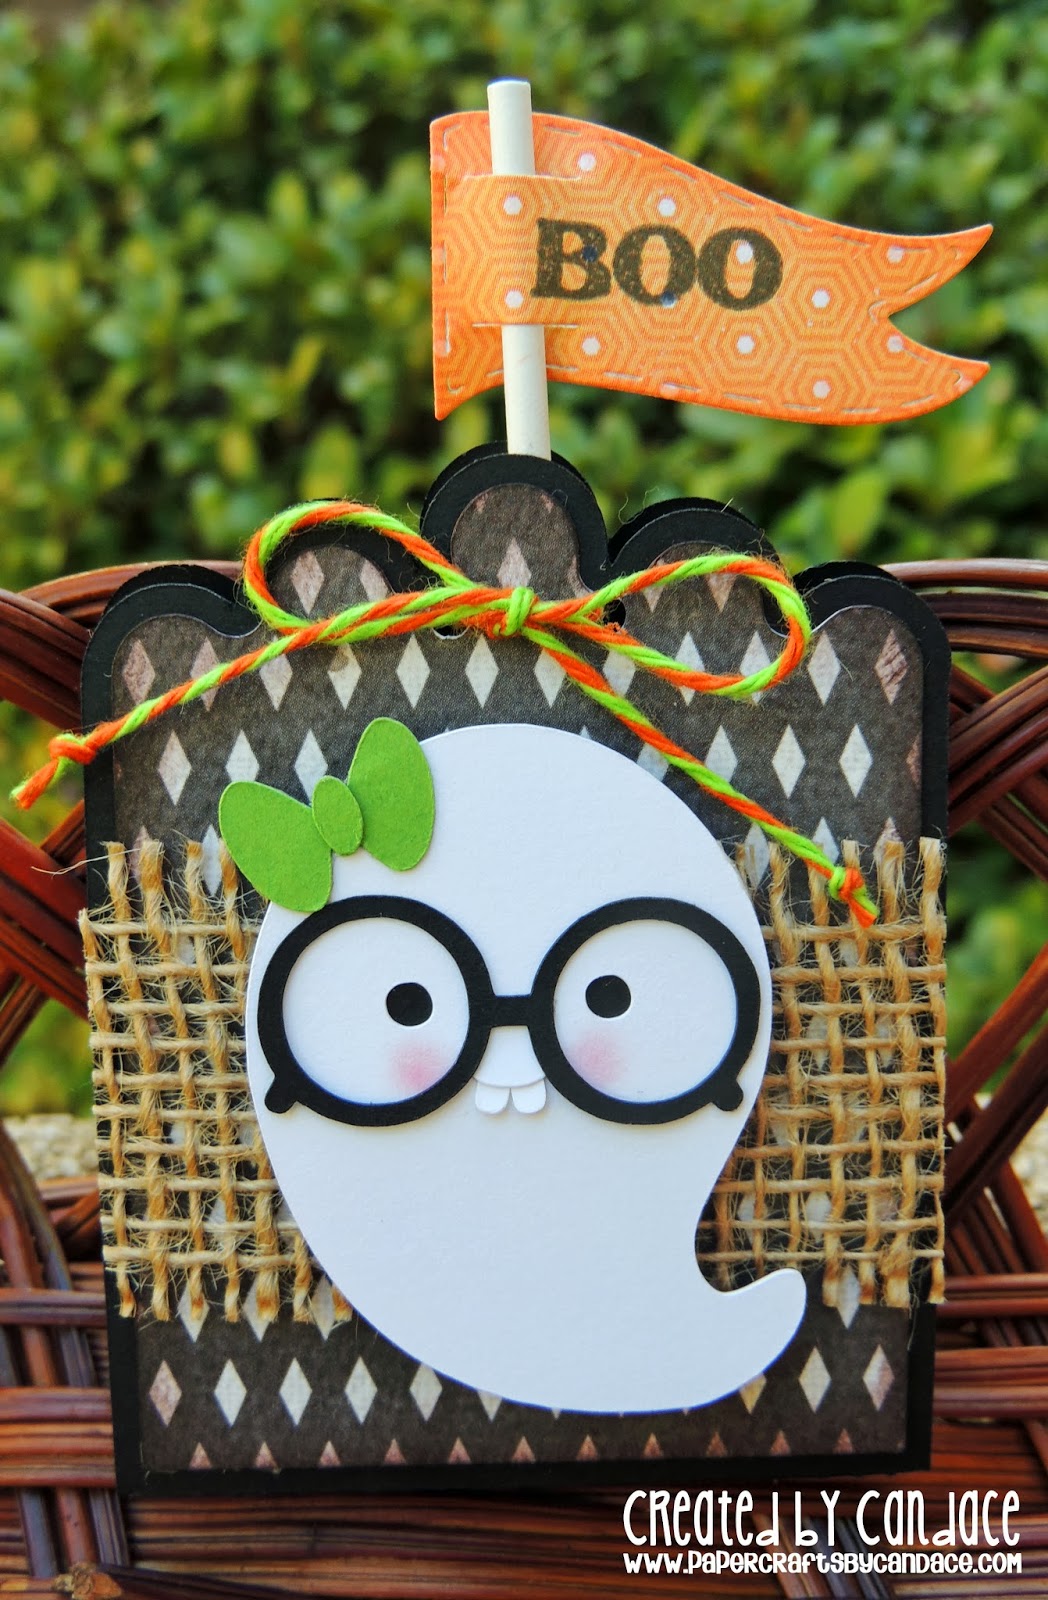 SVG Cutting Files: Nerdy Halloween Lollipop holders